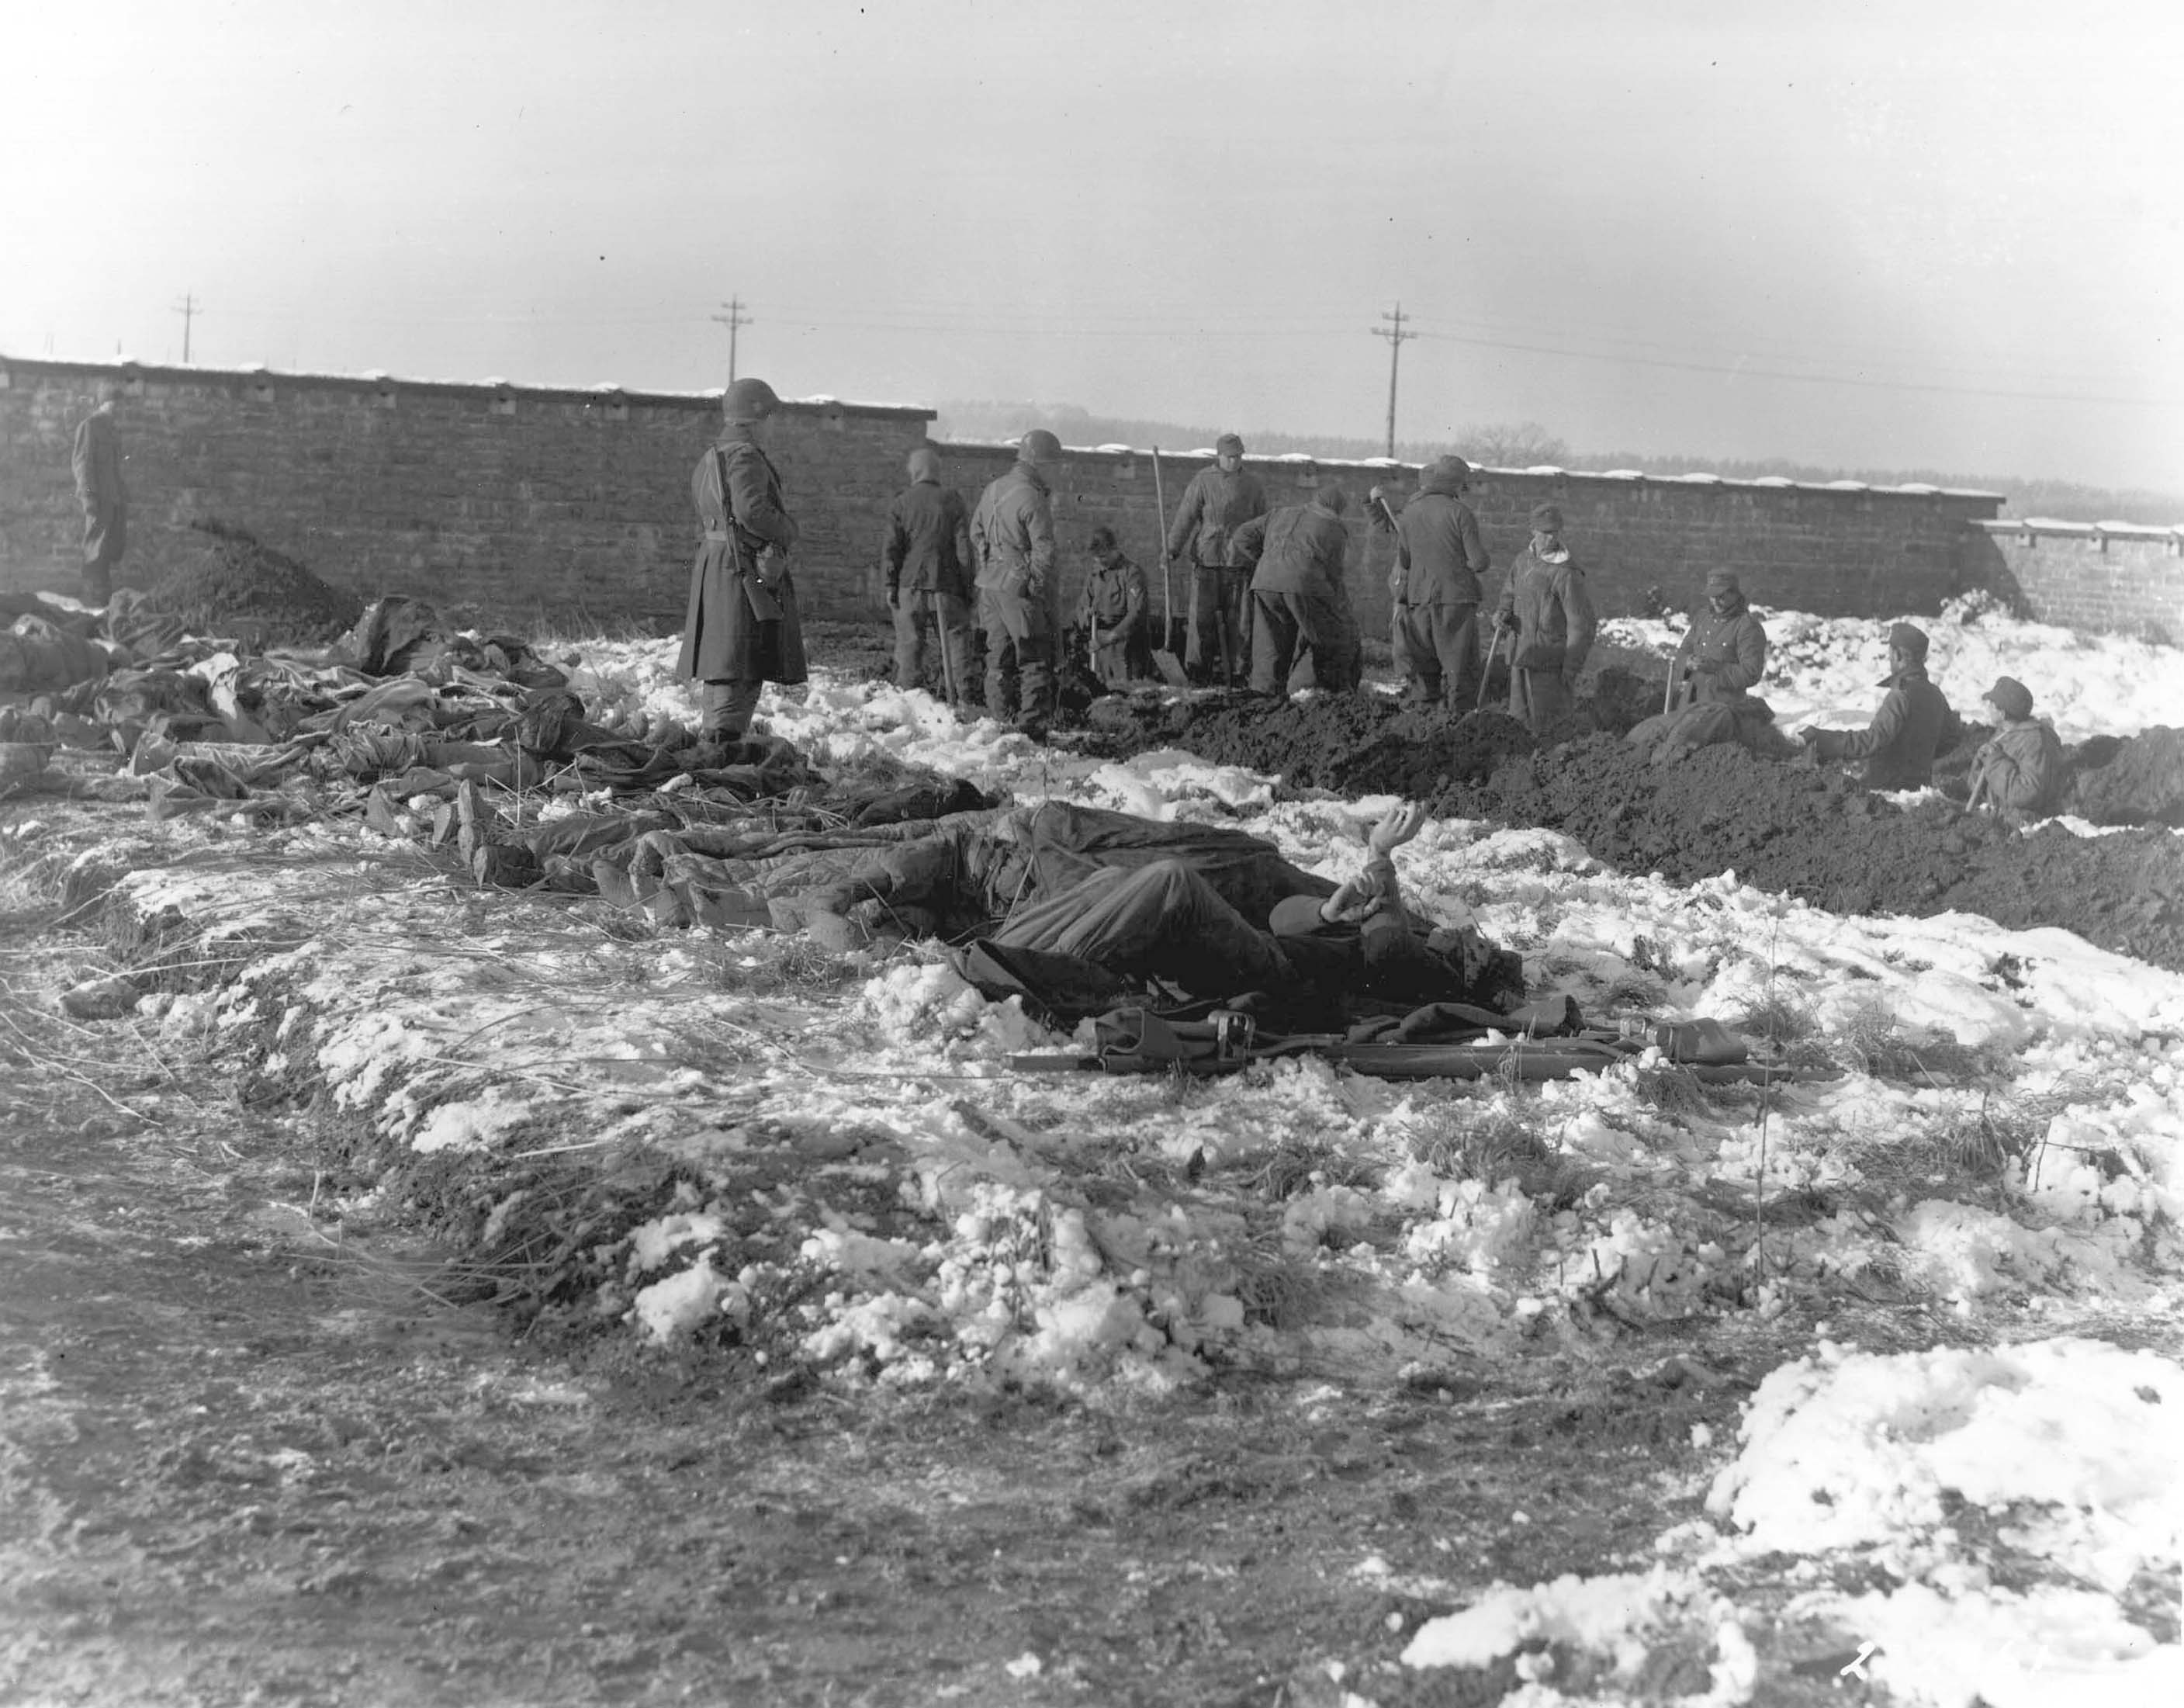 German prisoners of war digging graves for killed men of US 101st Airborne Division, near Bastogne, Belgium, late Dec 1944